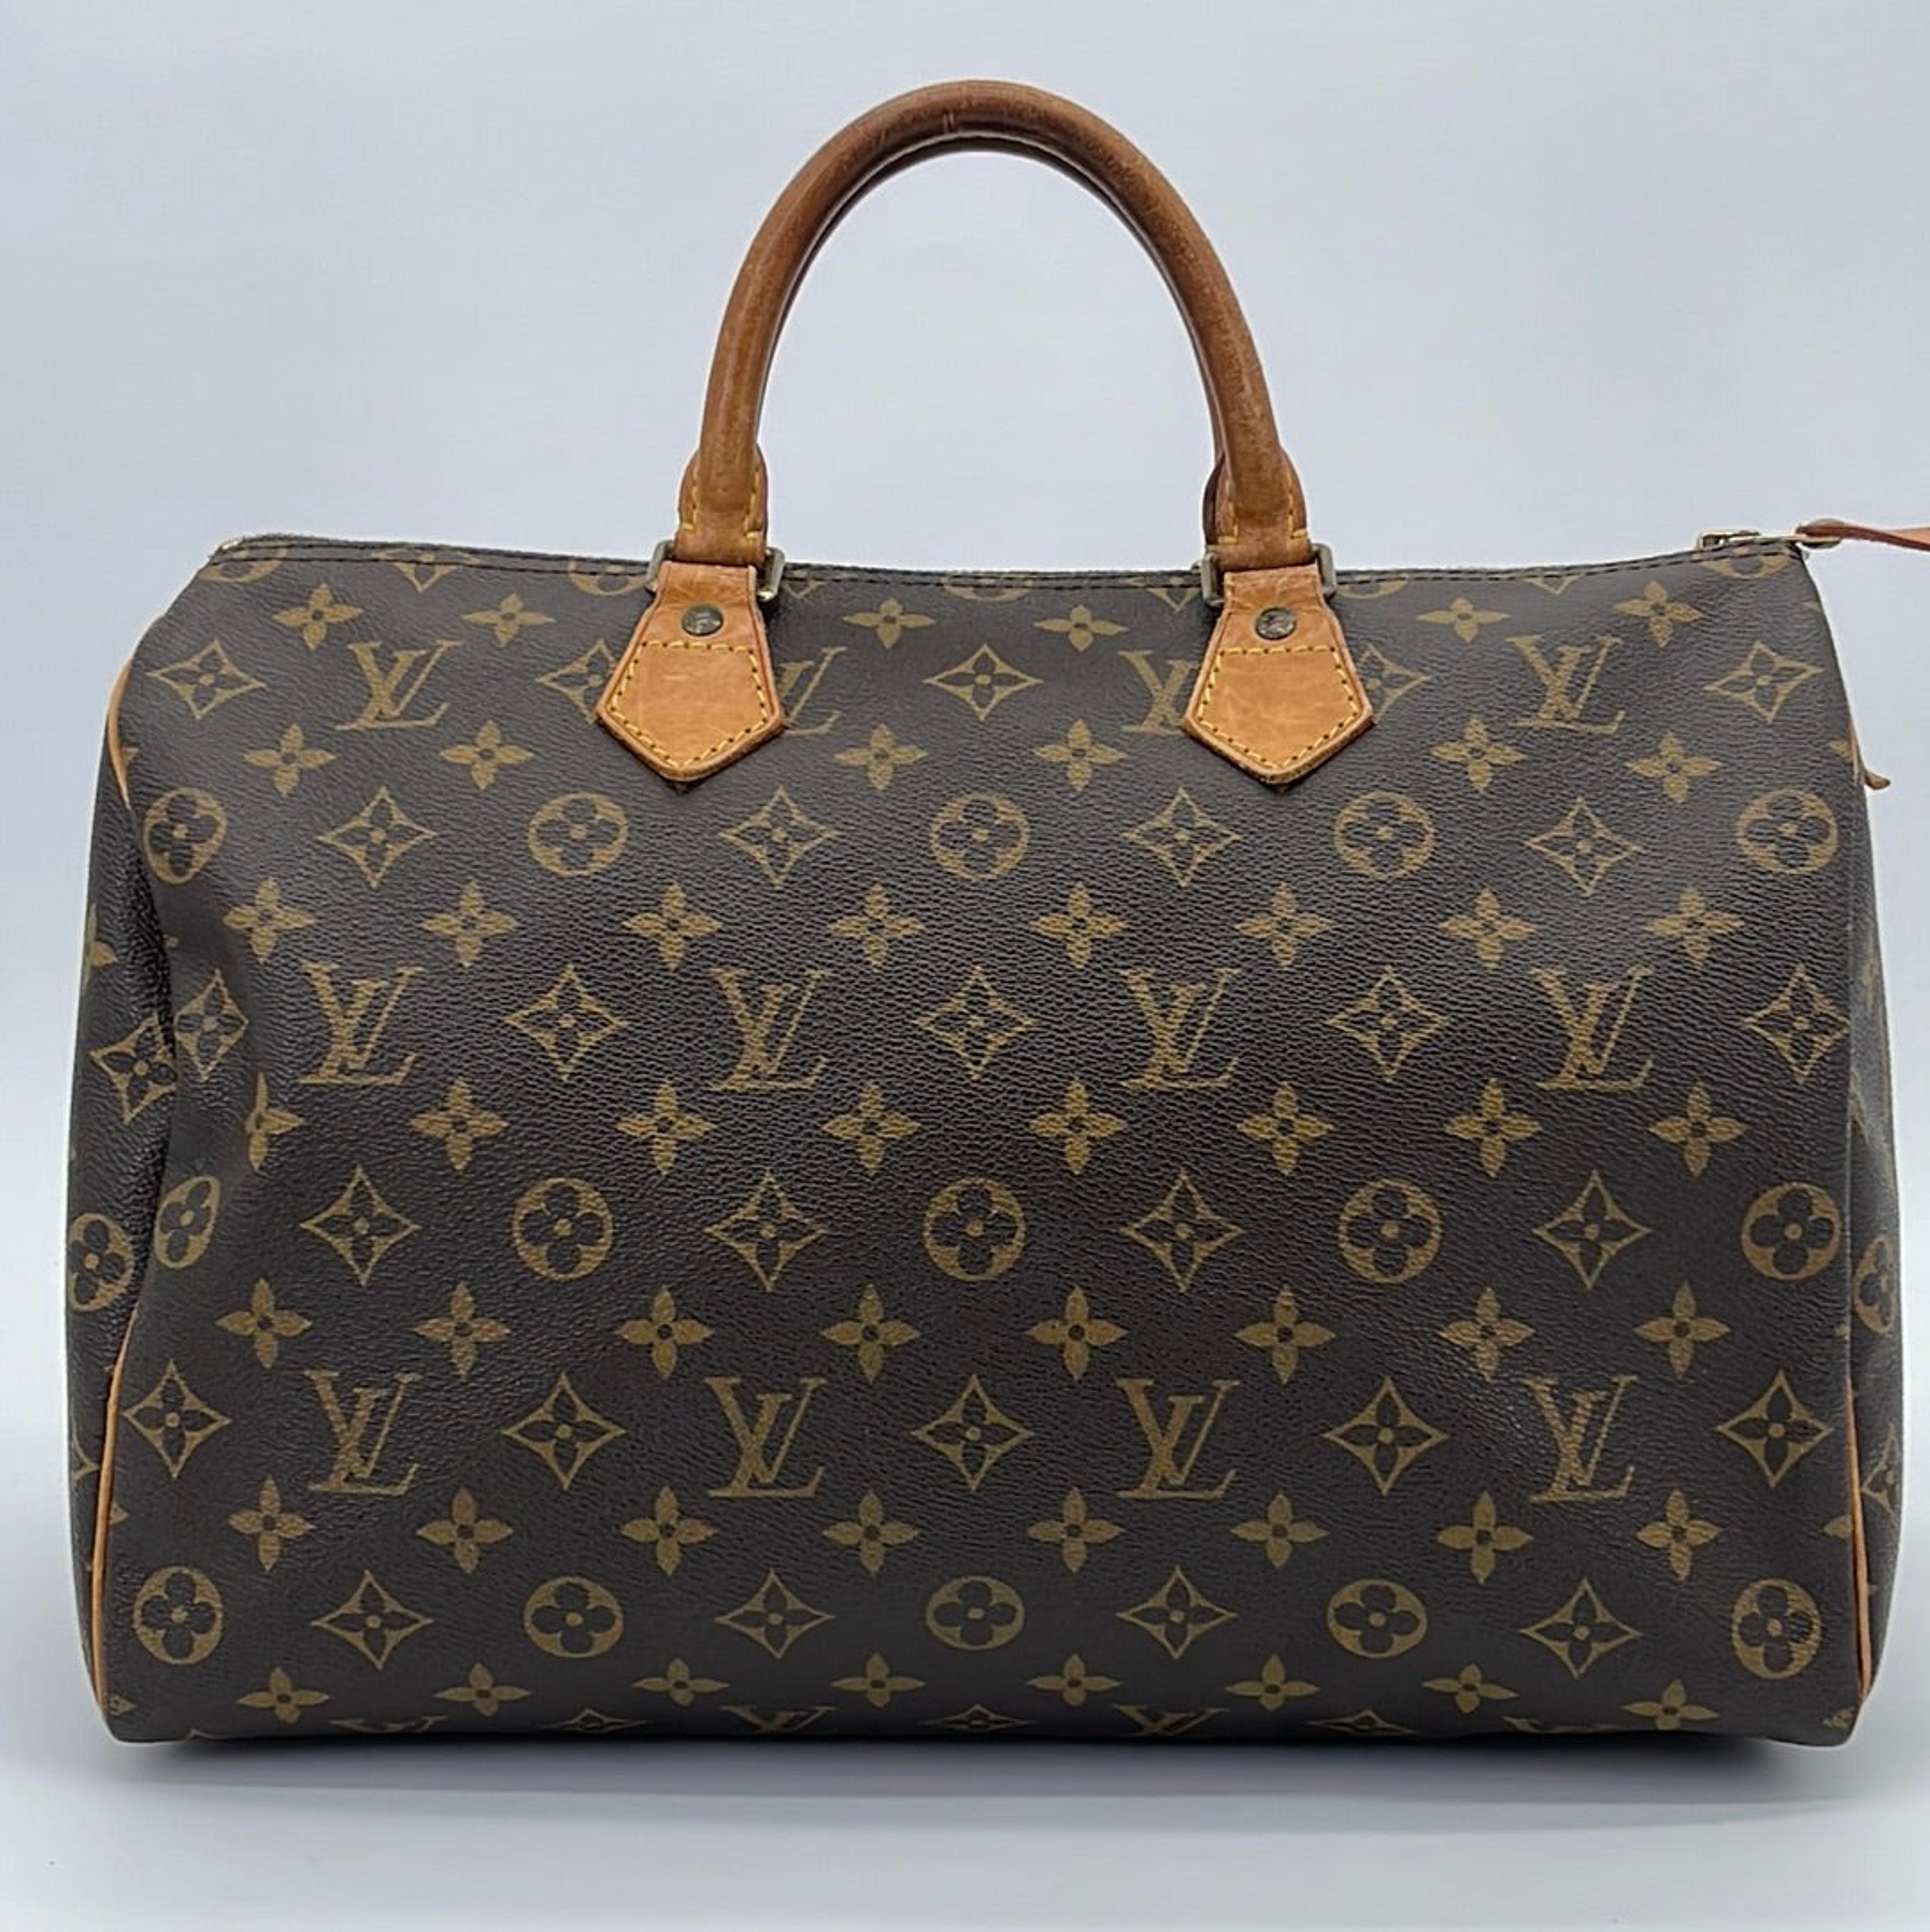 NTWRK - Preloved Louis Vuitton Speedy 35 Monogram Bag SP1904 051823